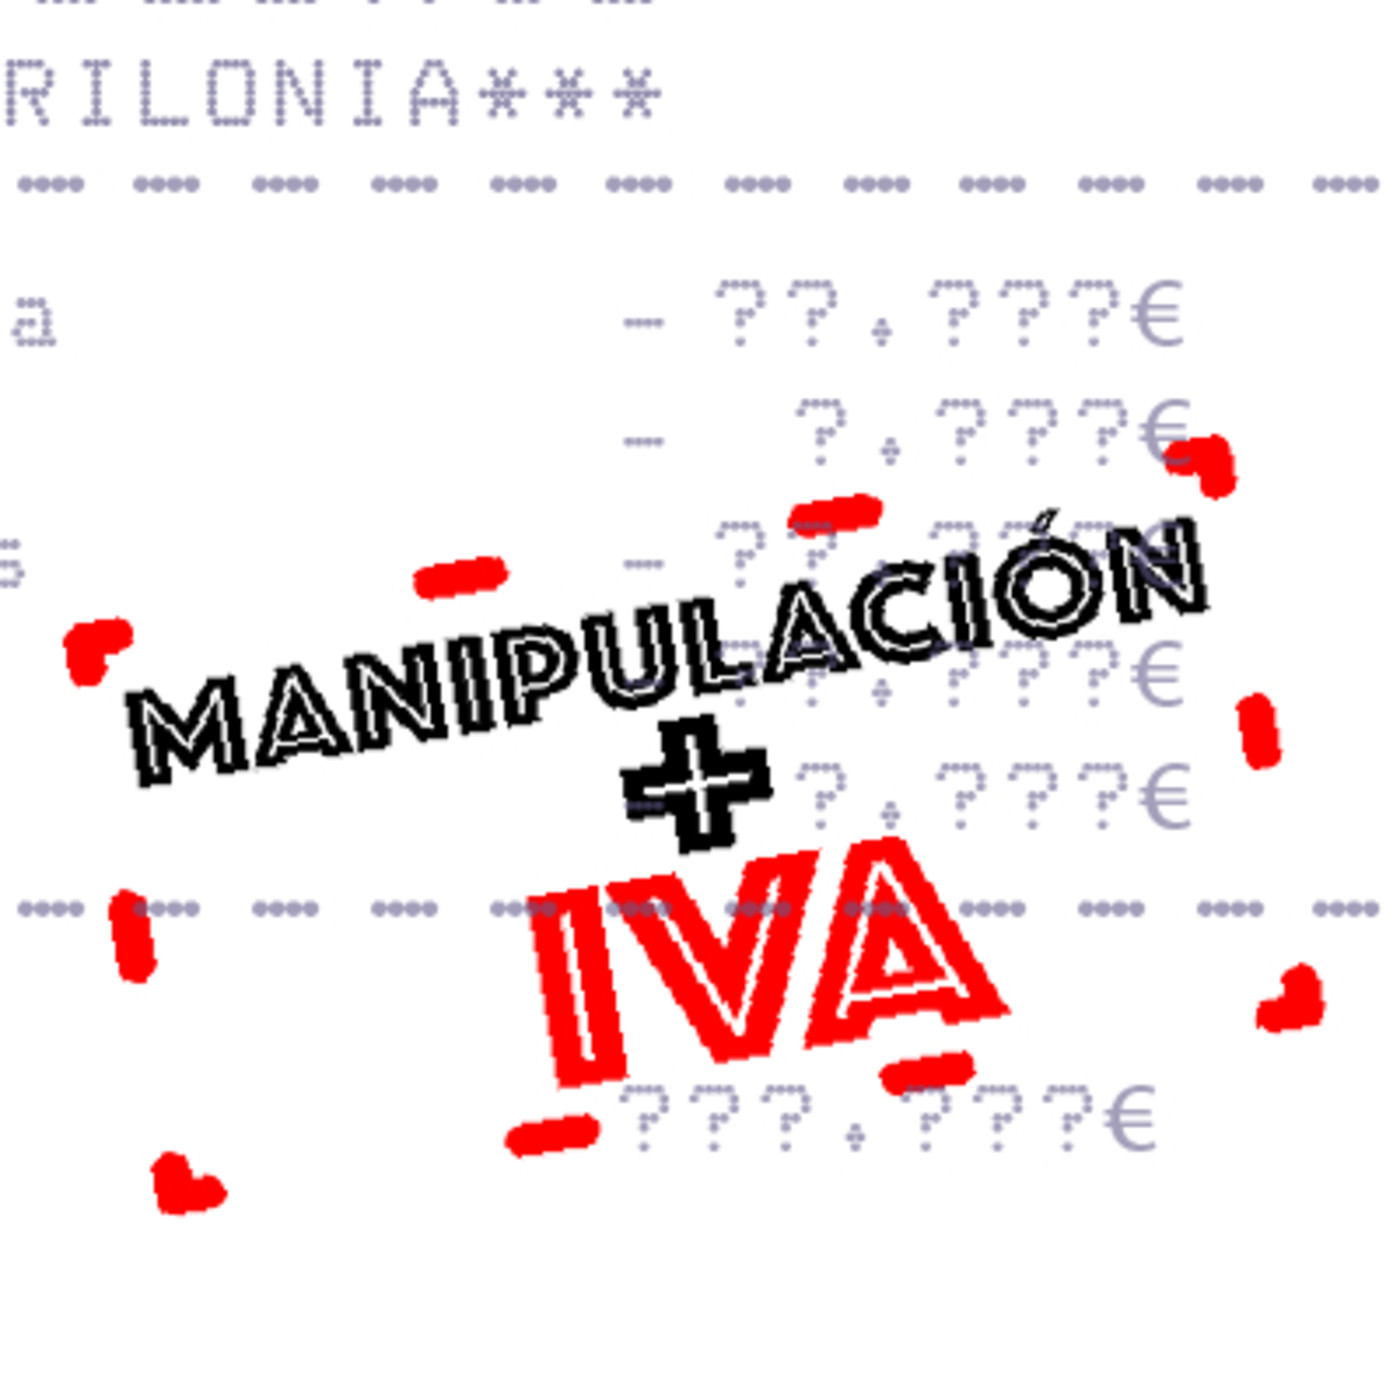 Manipulación + Iva